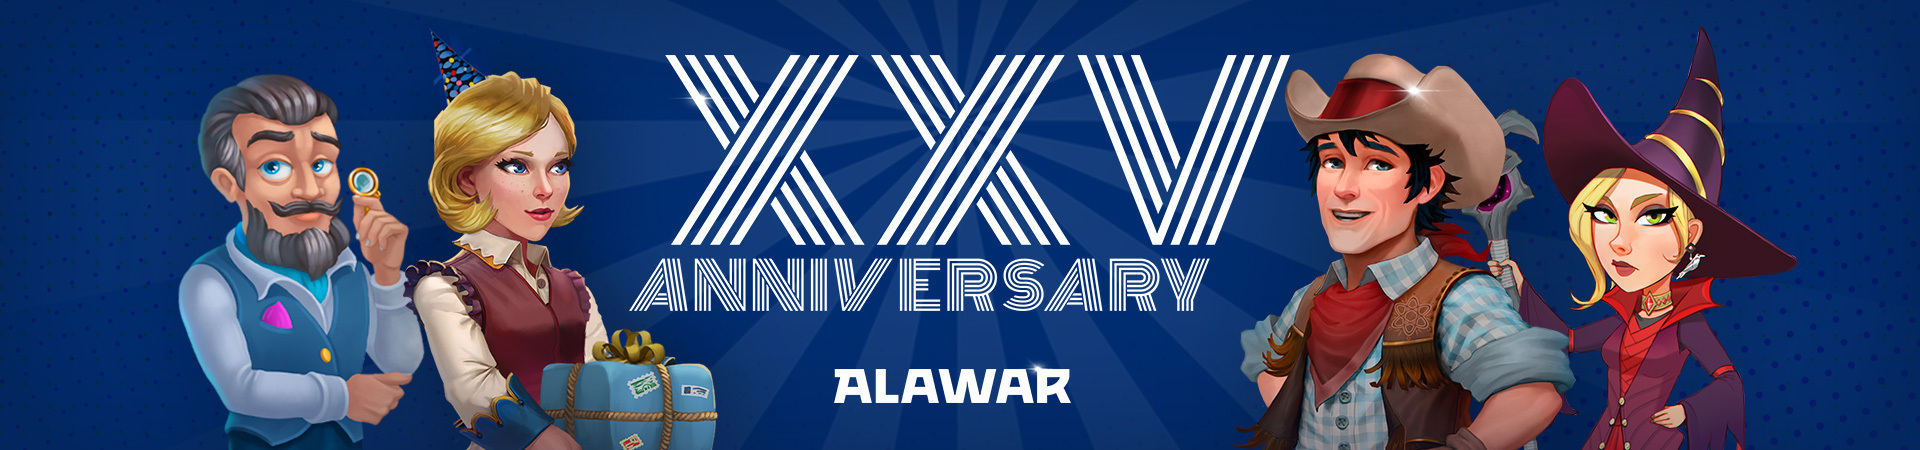 Alawar's 25th Anniversary - Celebrate Alawar's 25th Anniversary!